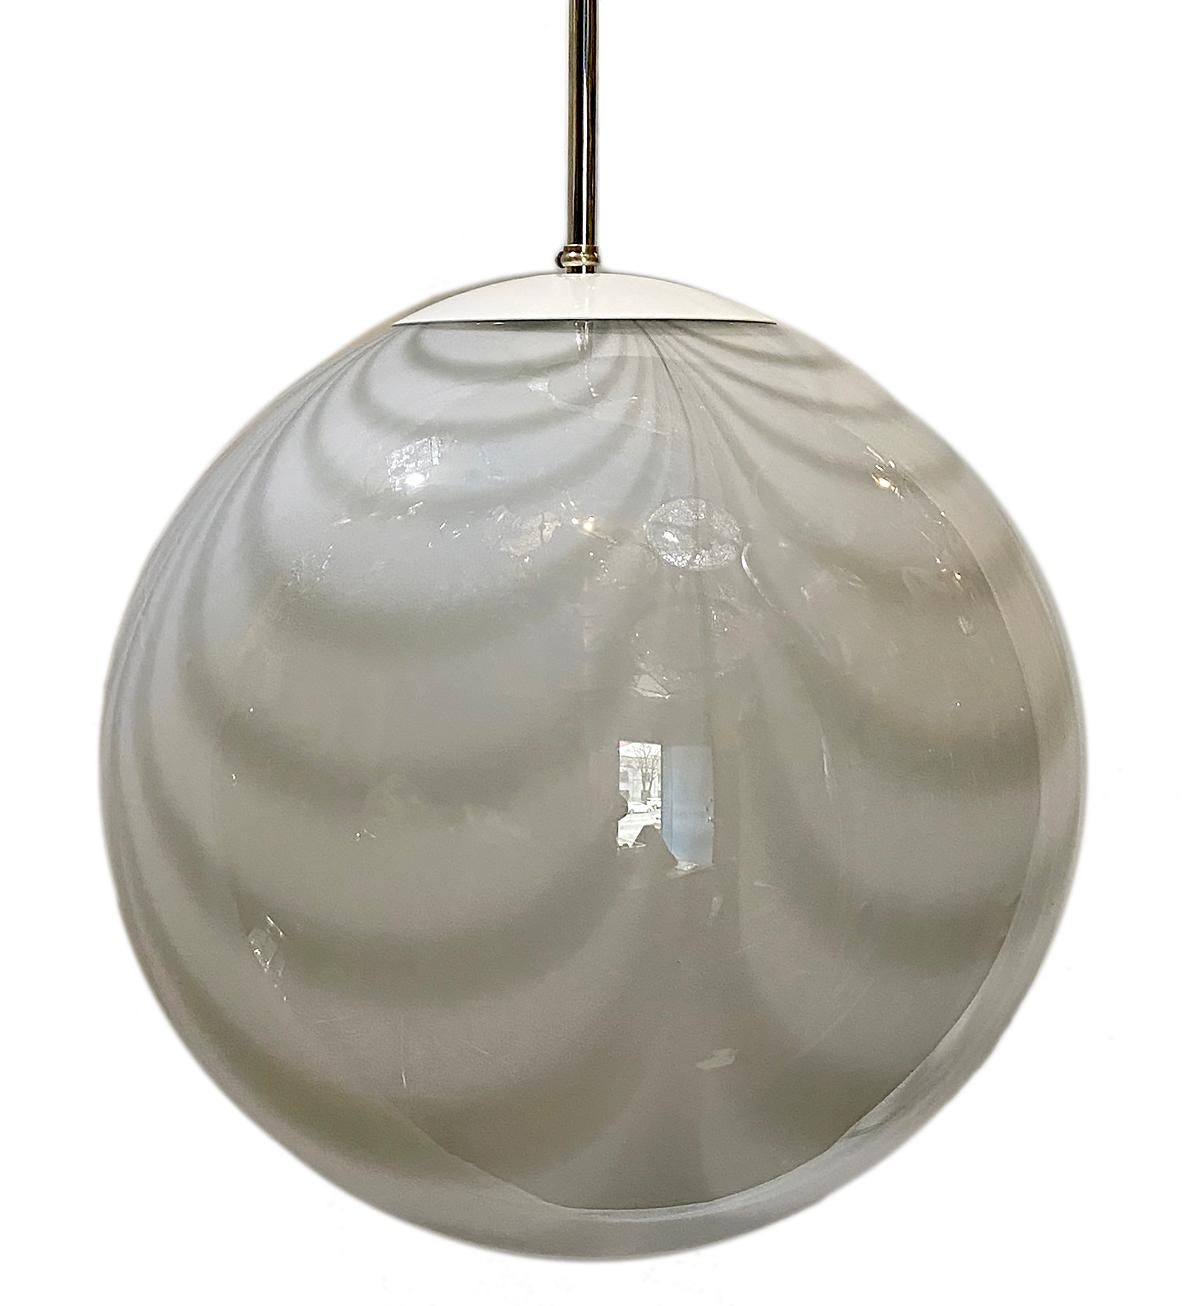 A circa 1960s Italian blown white clear glass light fixture with an interior light.

Measurements:
Diameter 16